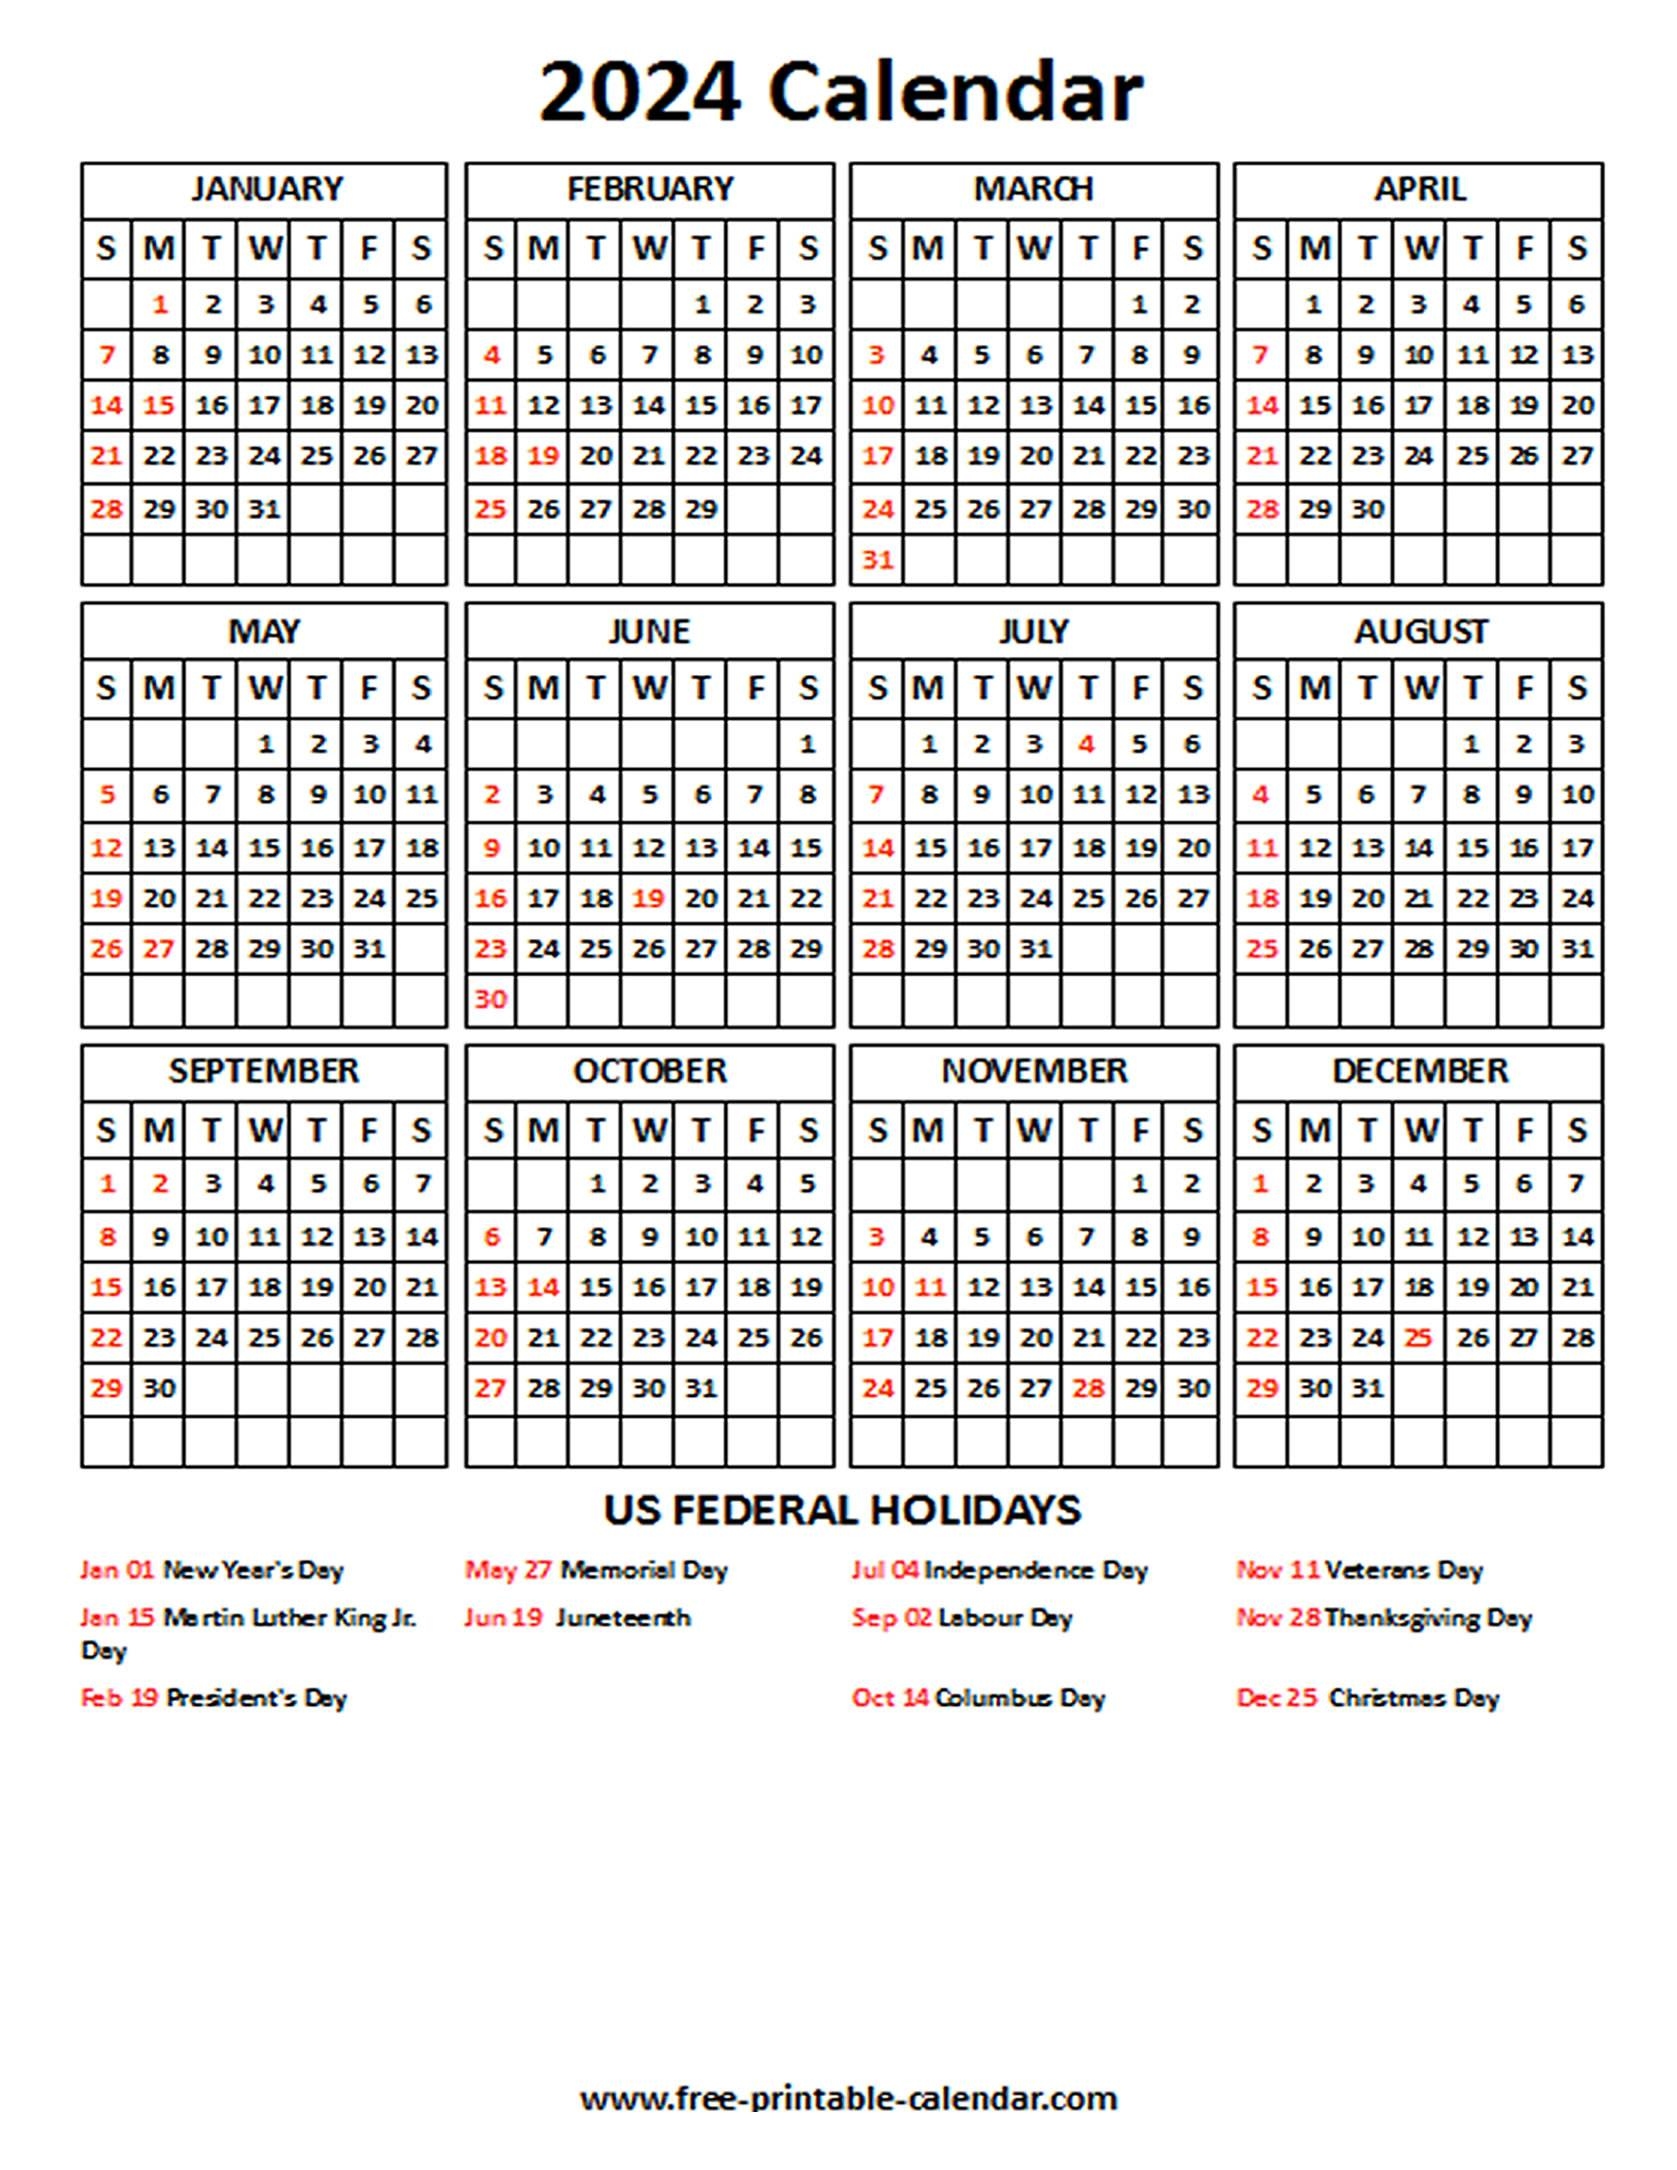 2024 Calendar With Us Holidays - Free-Printable-Calendar within Free Printable Calendar 2024 With Holidays Usa